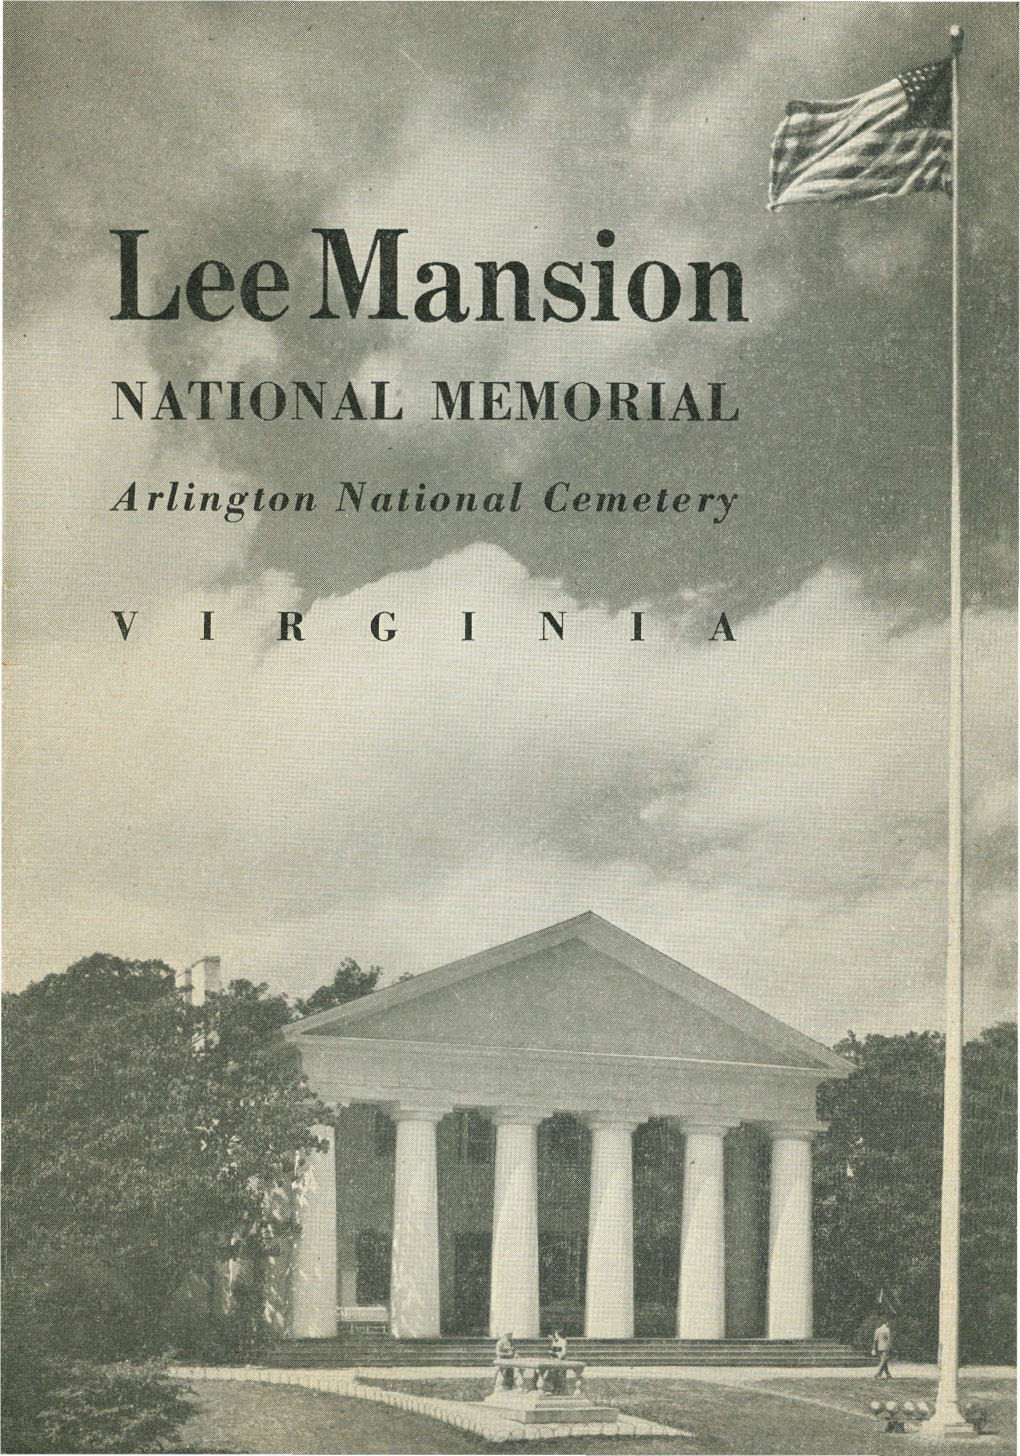 Lee Mansion National Memorial